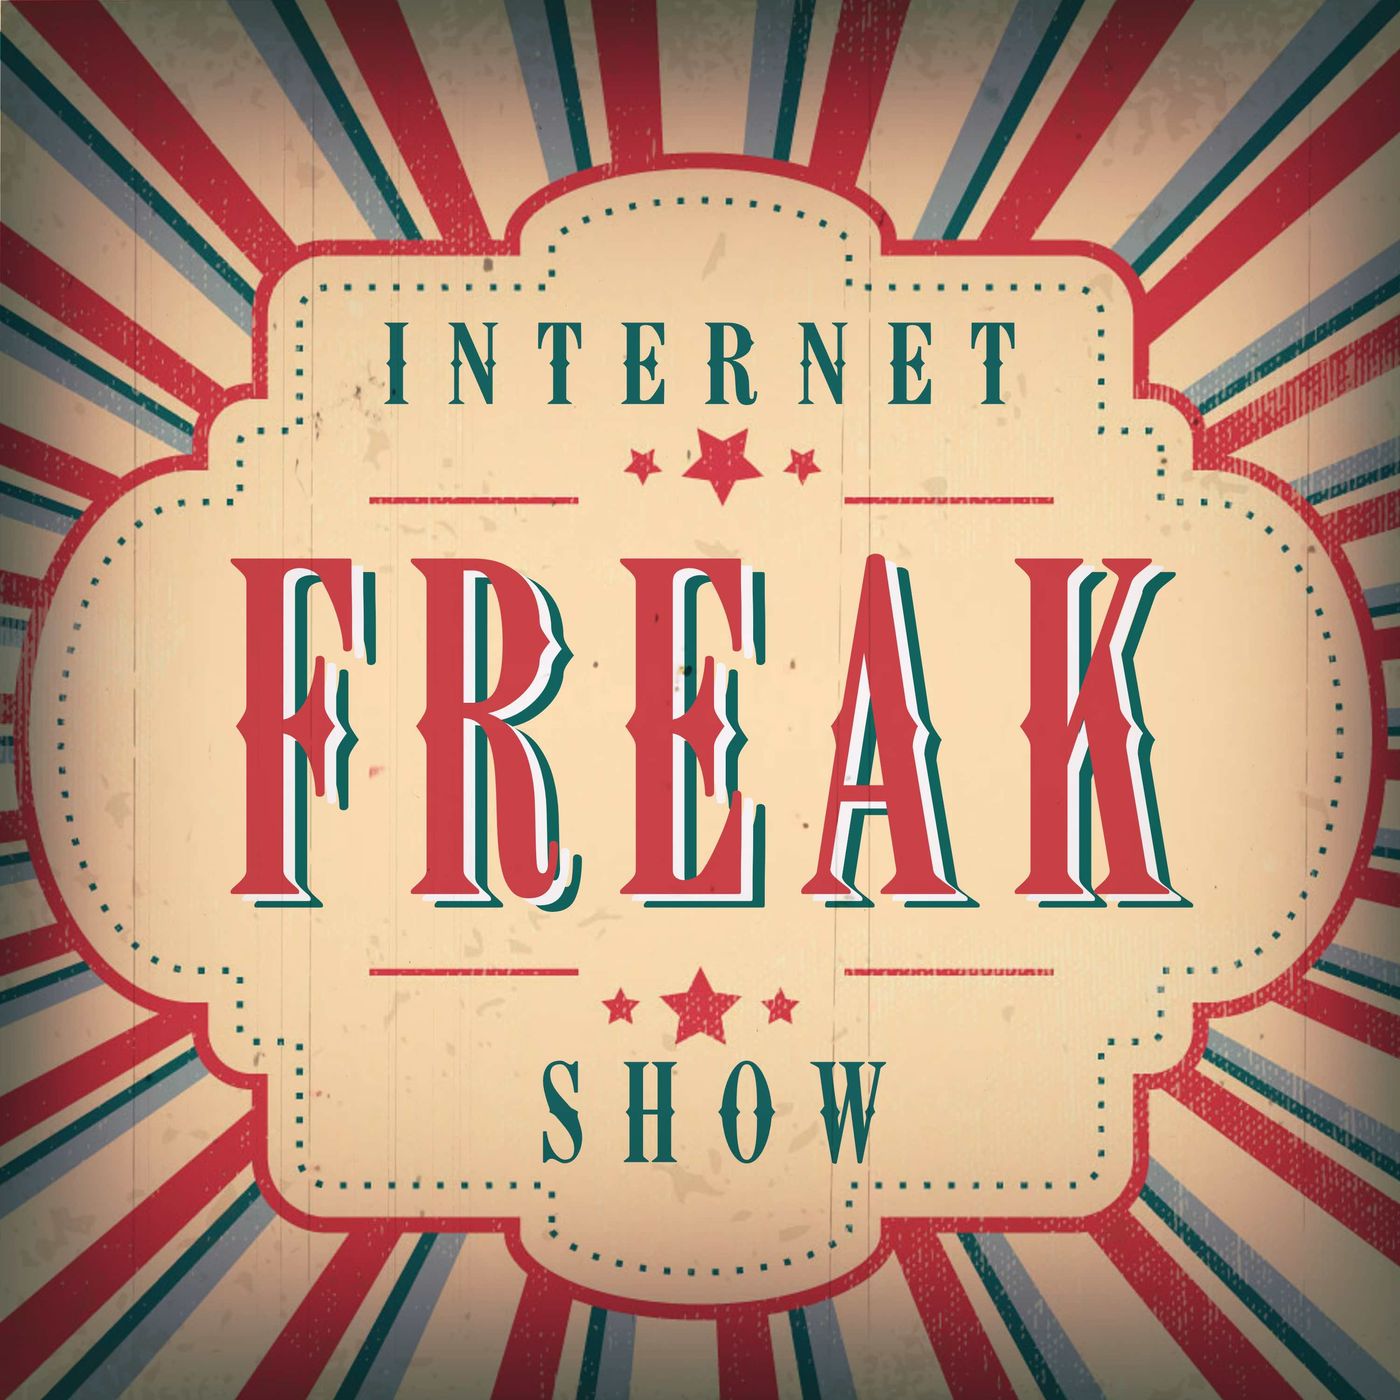 Internet Freakshow – Stories of Internet Mysteries, Trolls, Weirdos, and Freaks